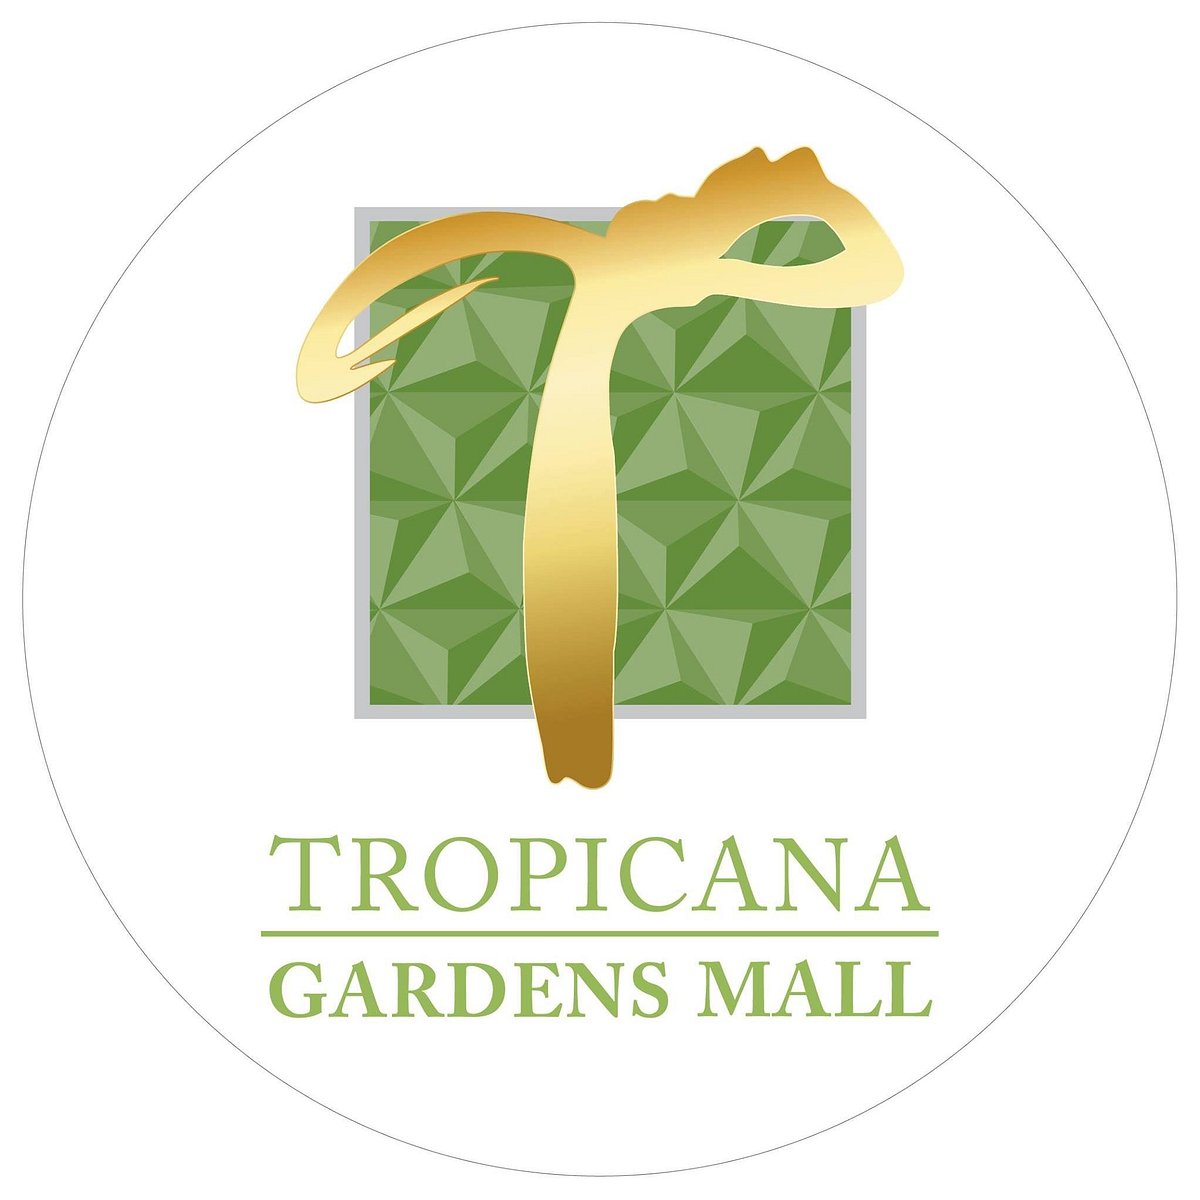 Tropicana mall gsc gardens qa1.fuse.tv: Showtimes